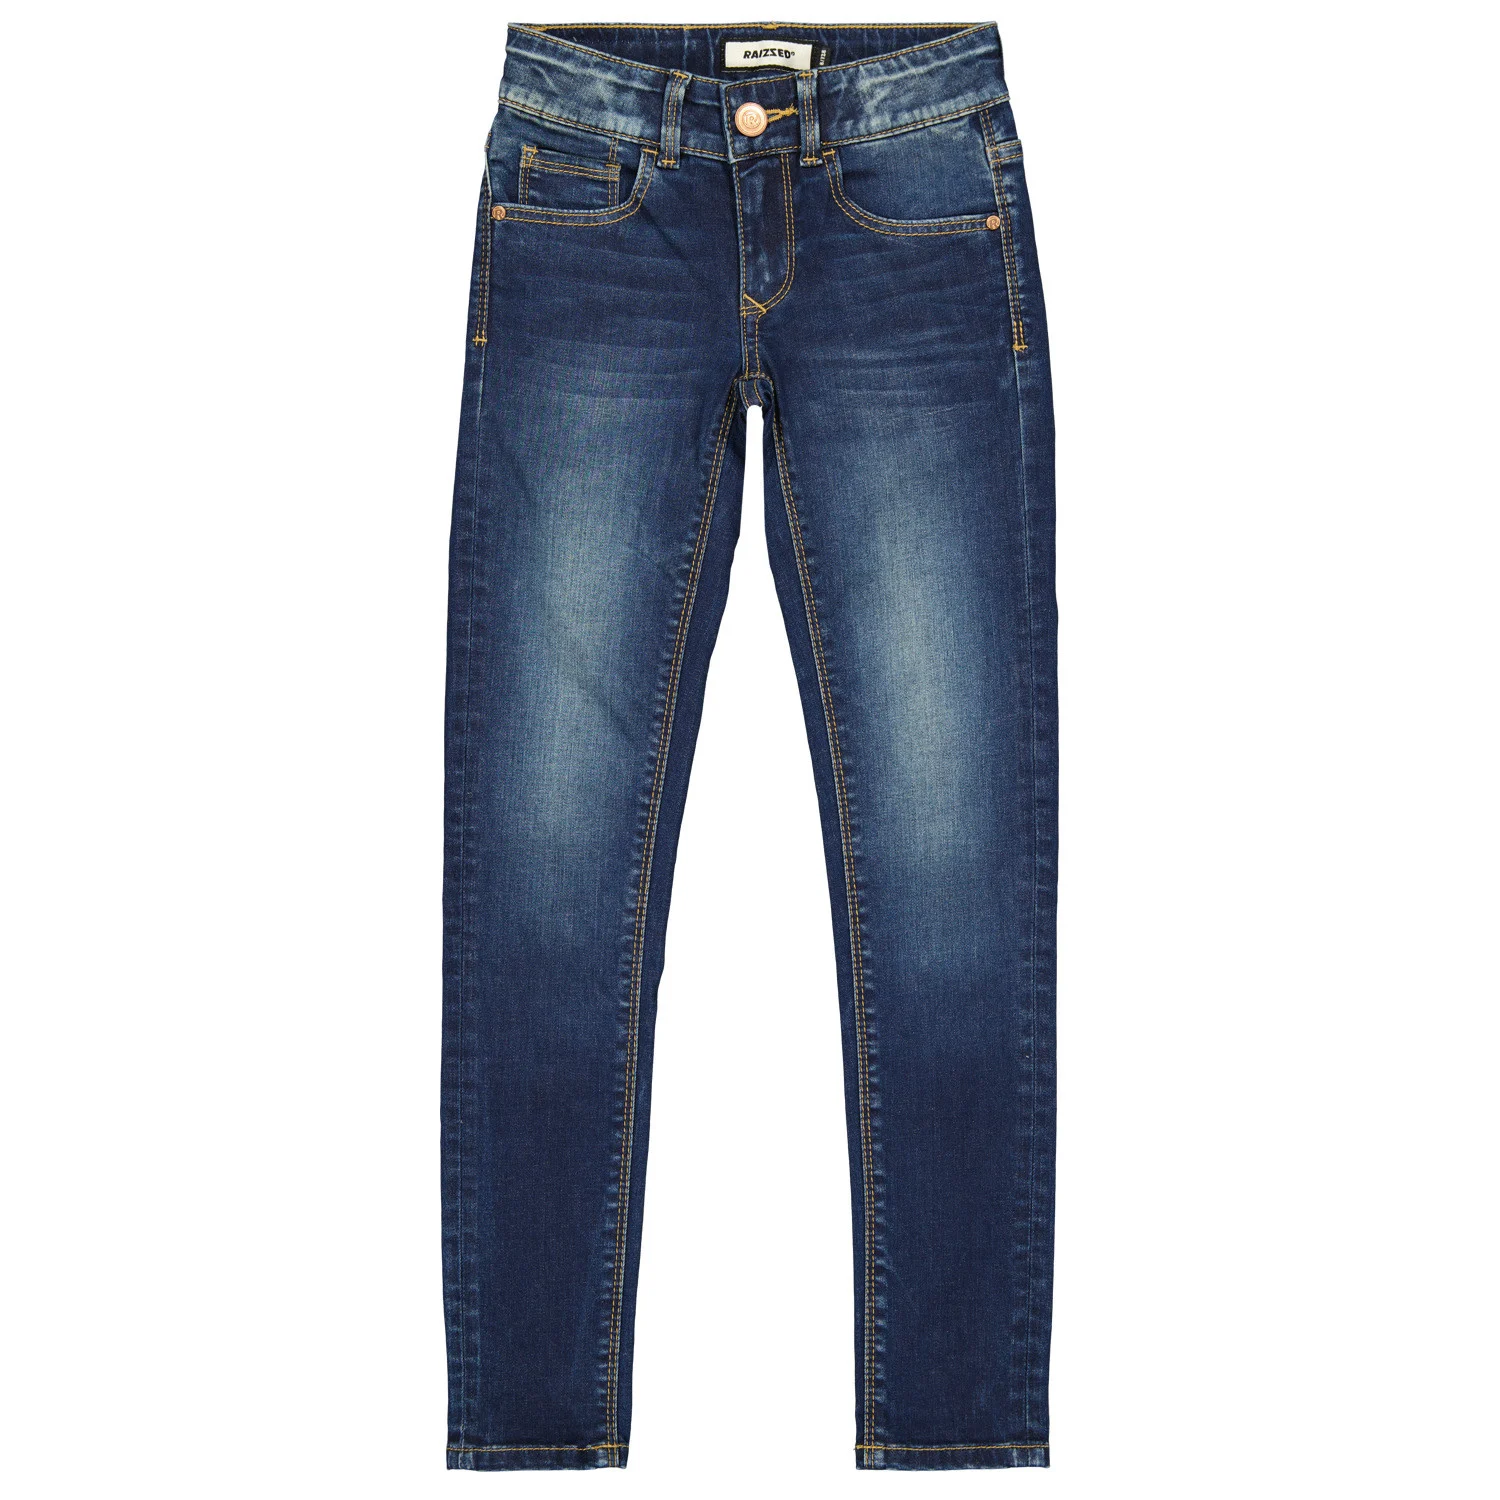 Afbeelding van Raizzed Meiden jeans adelaide super skinny fit dark blue stone